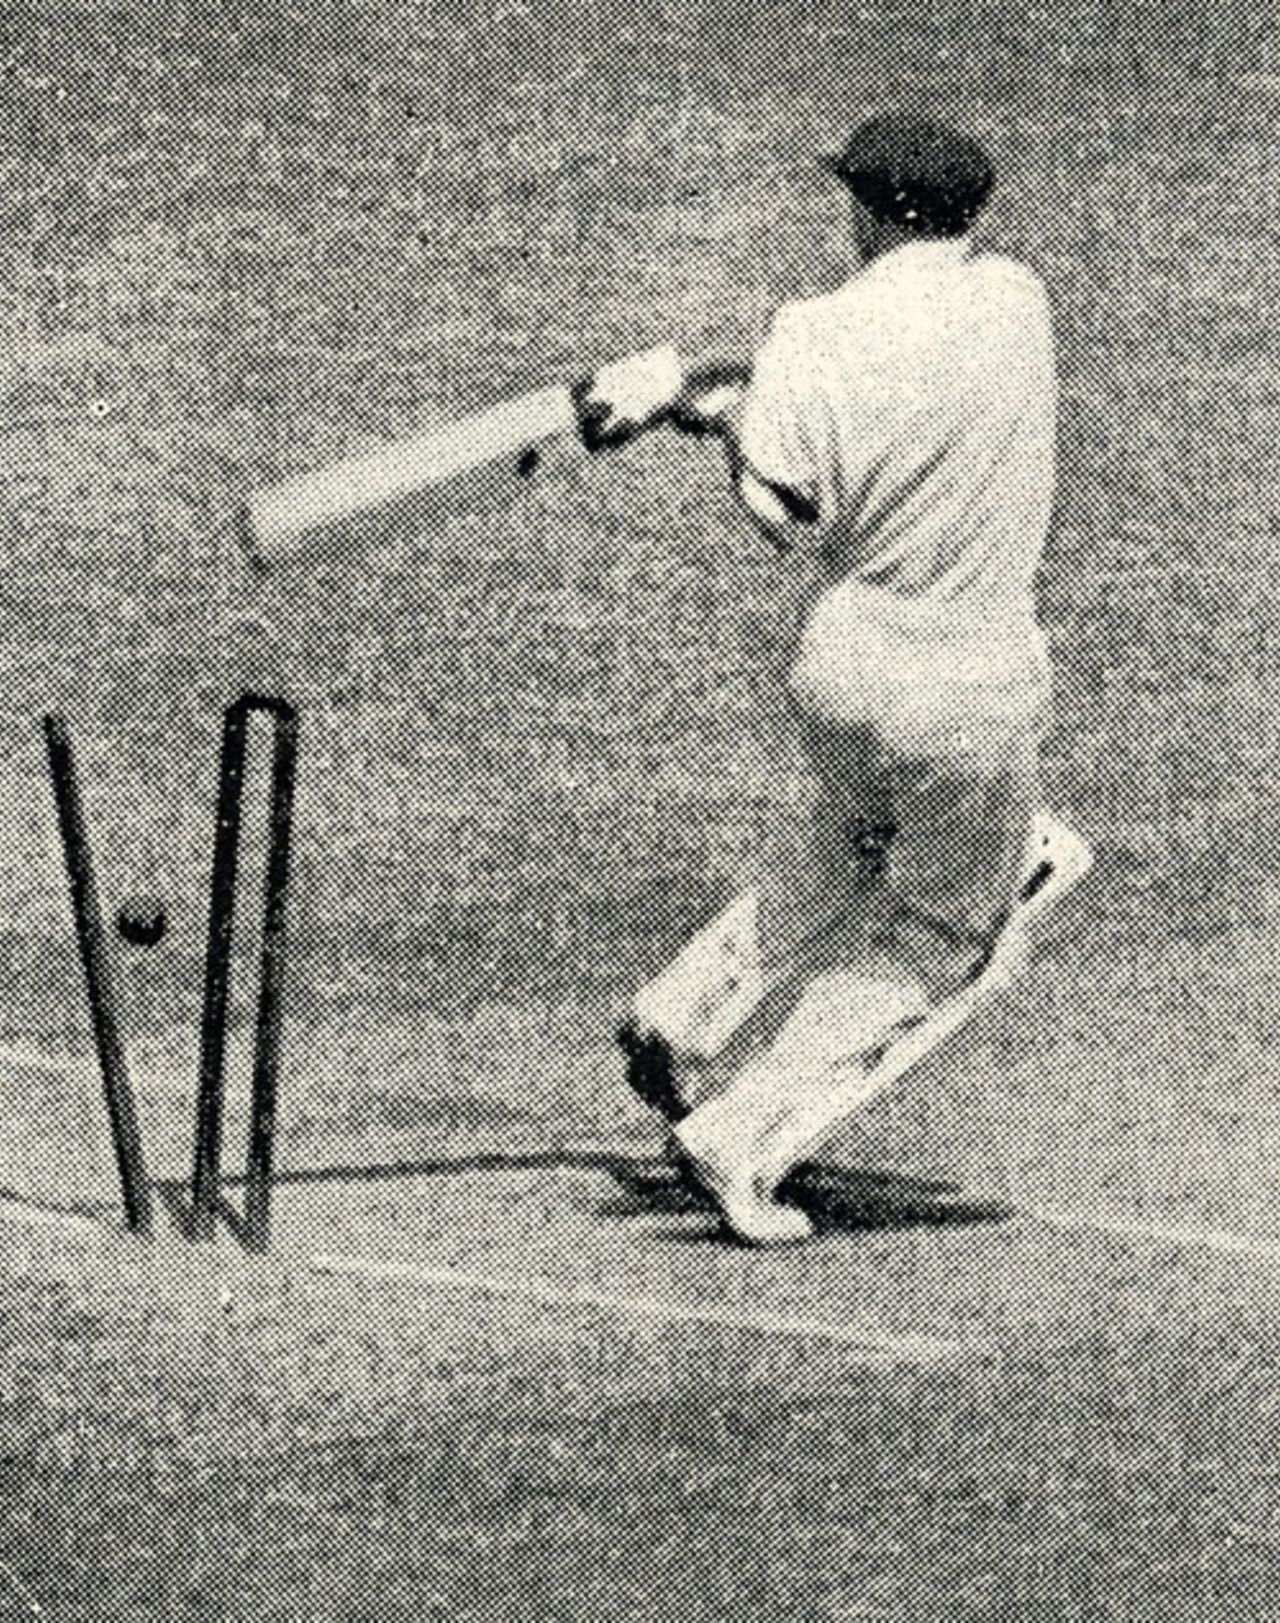 Don Bradman bowled for 0, England v Australia, 2nd Test, Melbourne, December 30, 1932